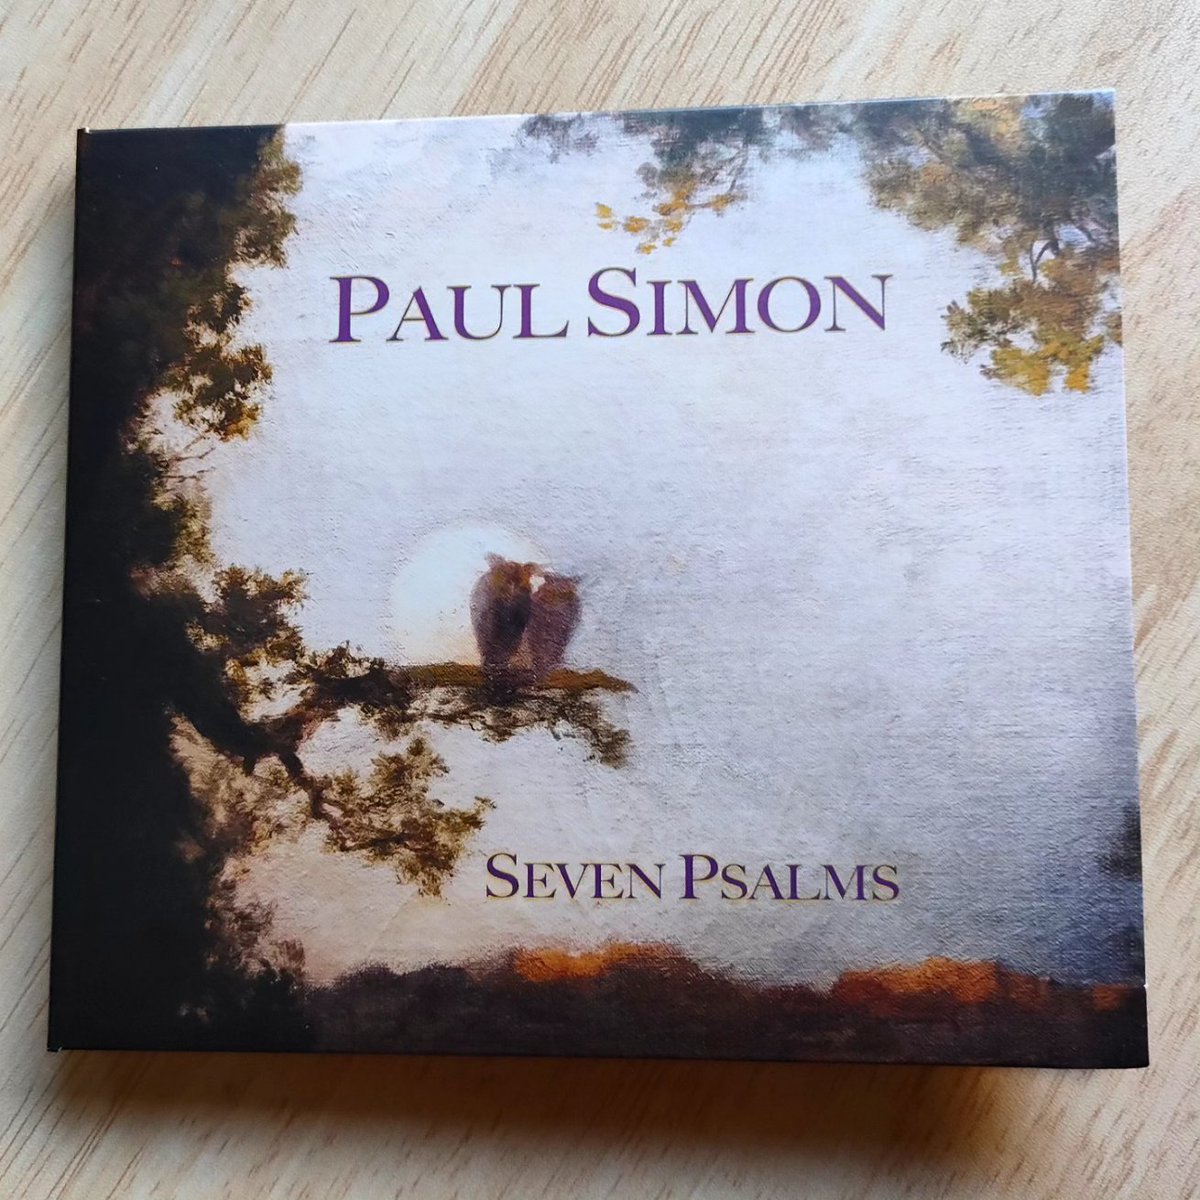 Qué increíble maravilla.
@PaulSimonMusic 
#sevenpsalms